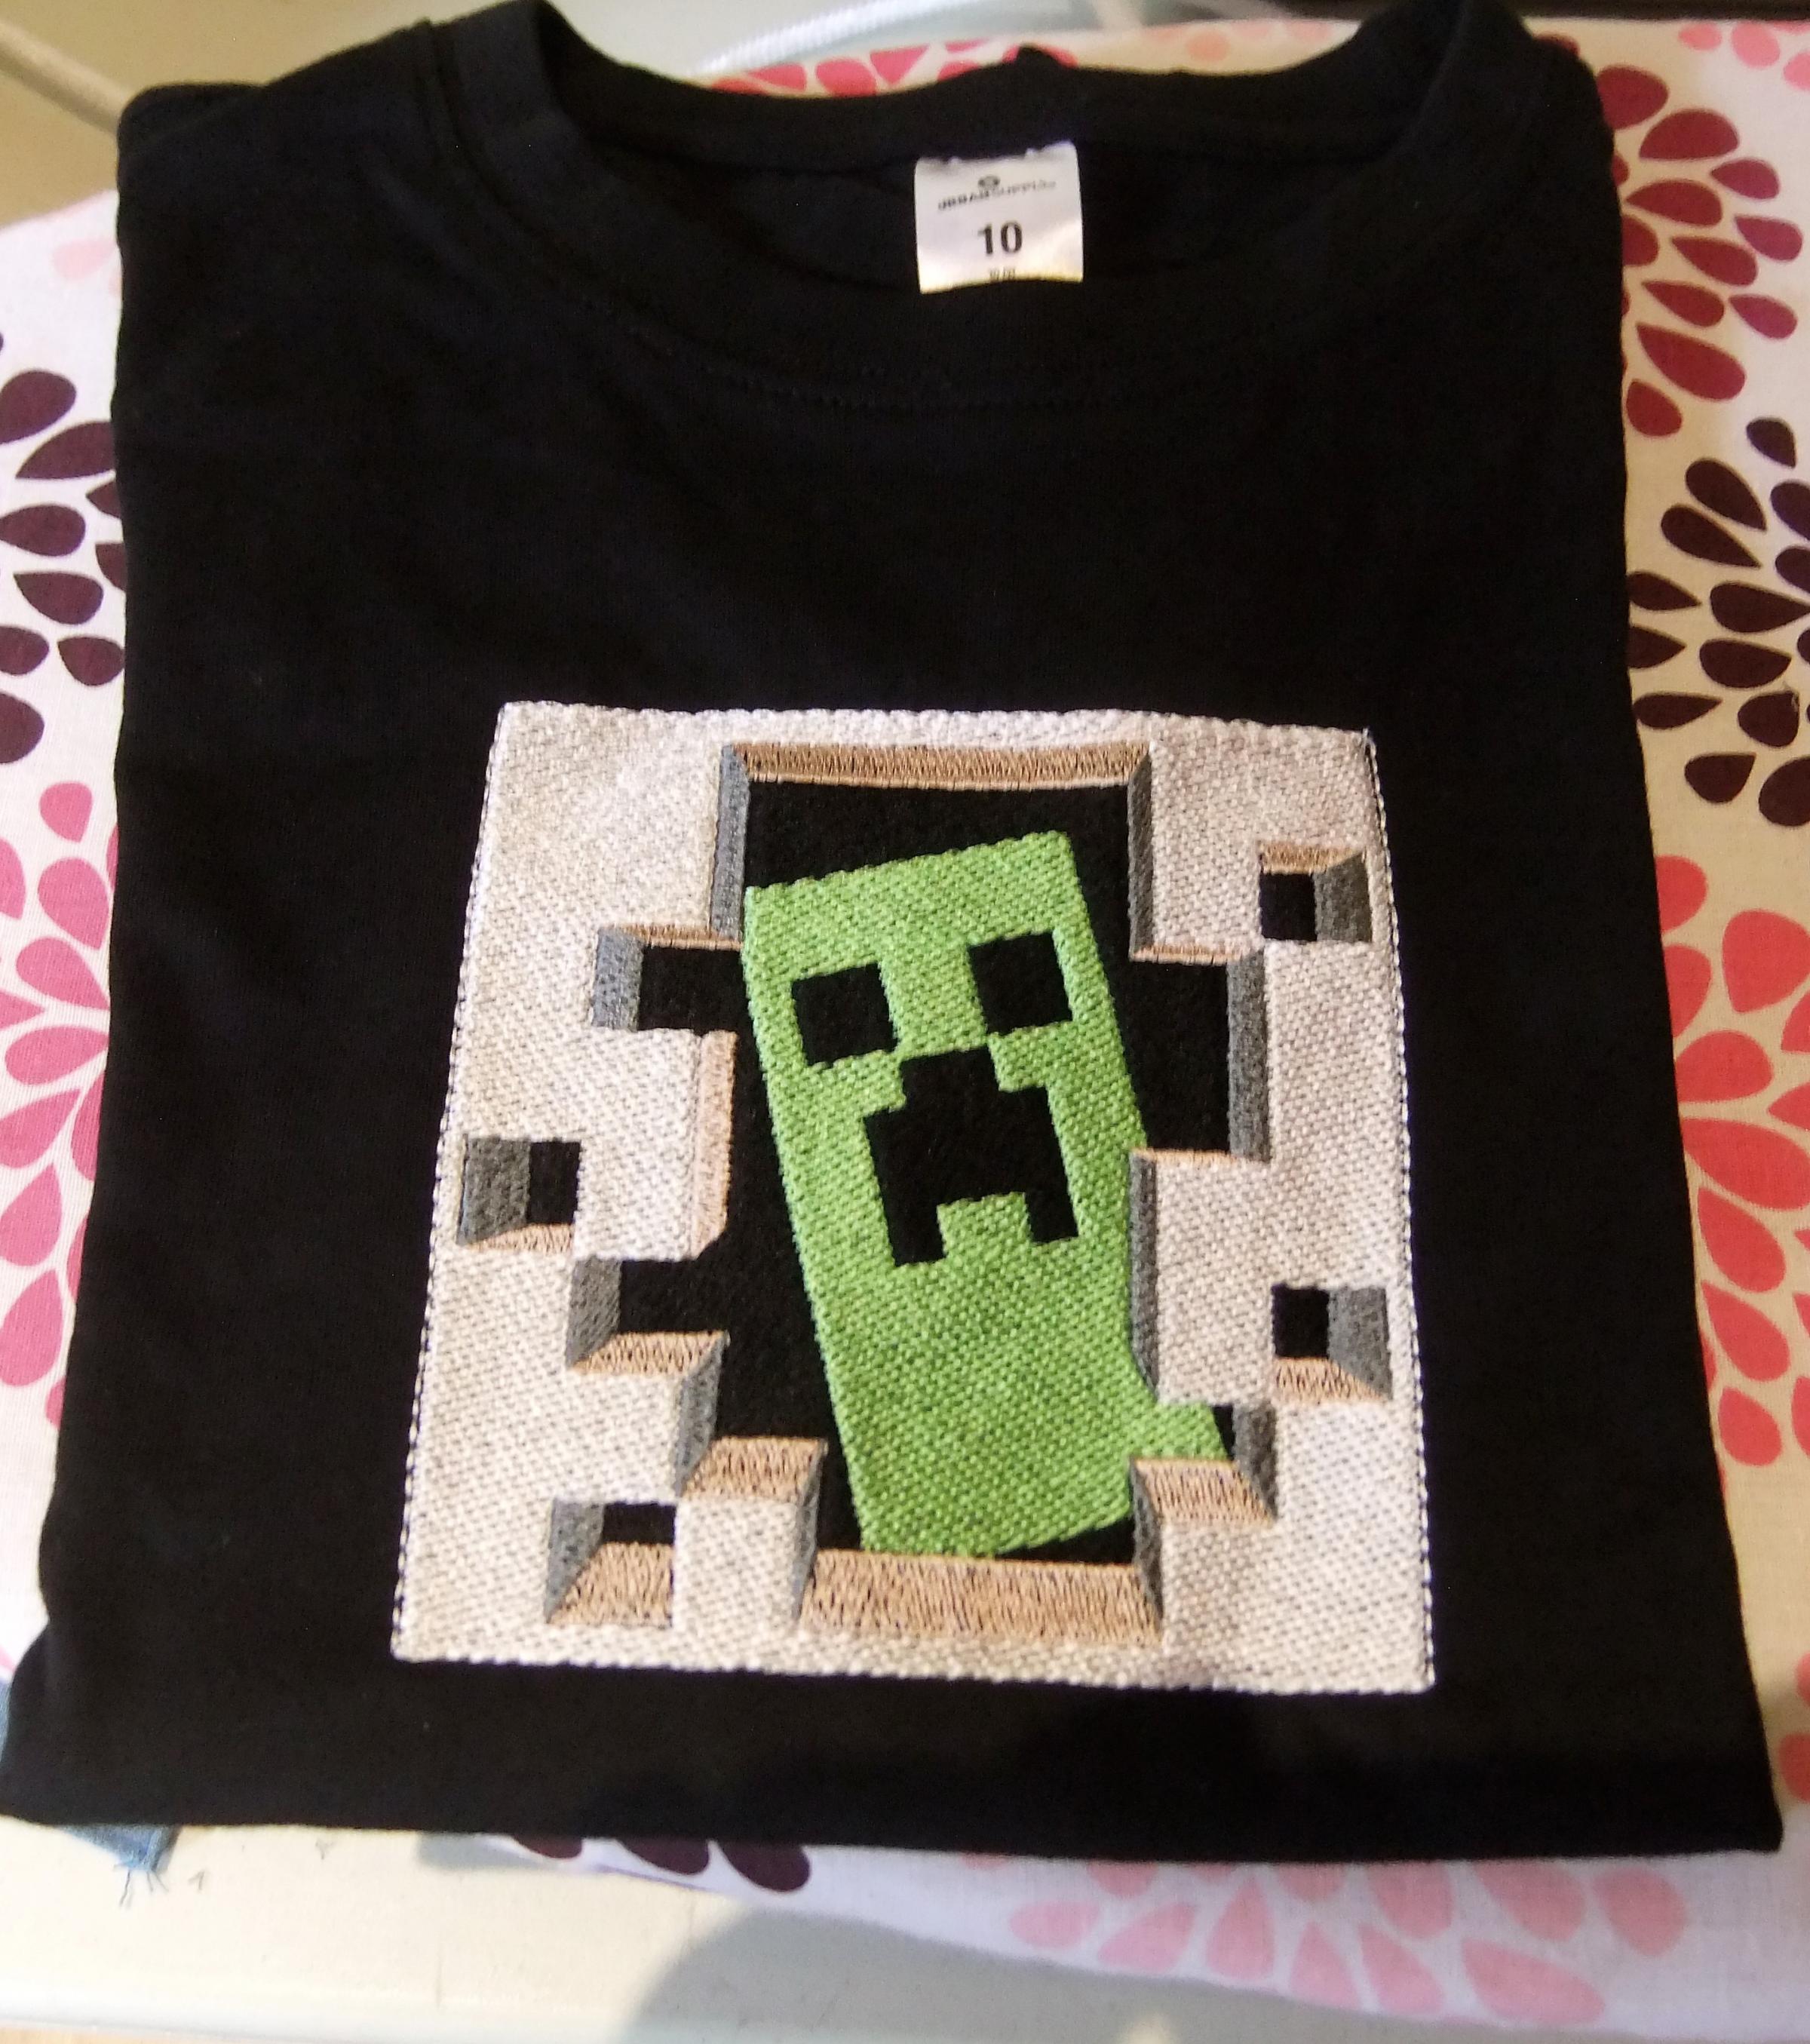 Embroidered girls shirt with Minecraft design